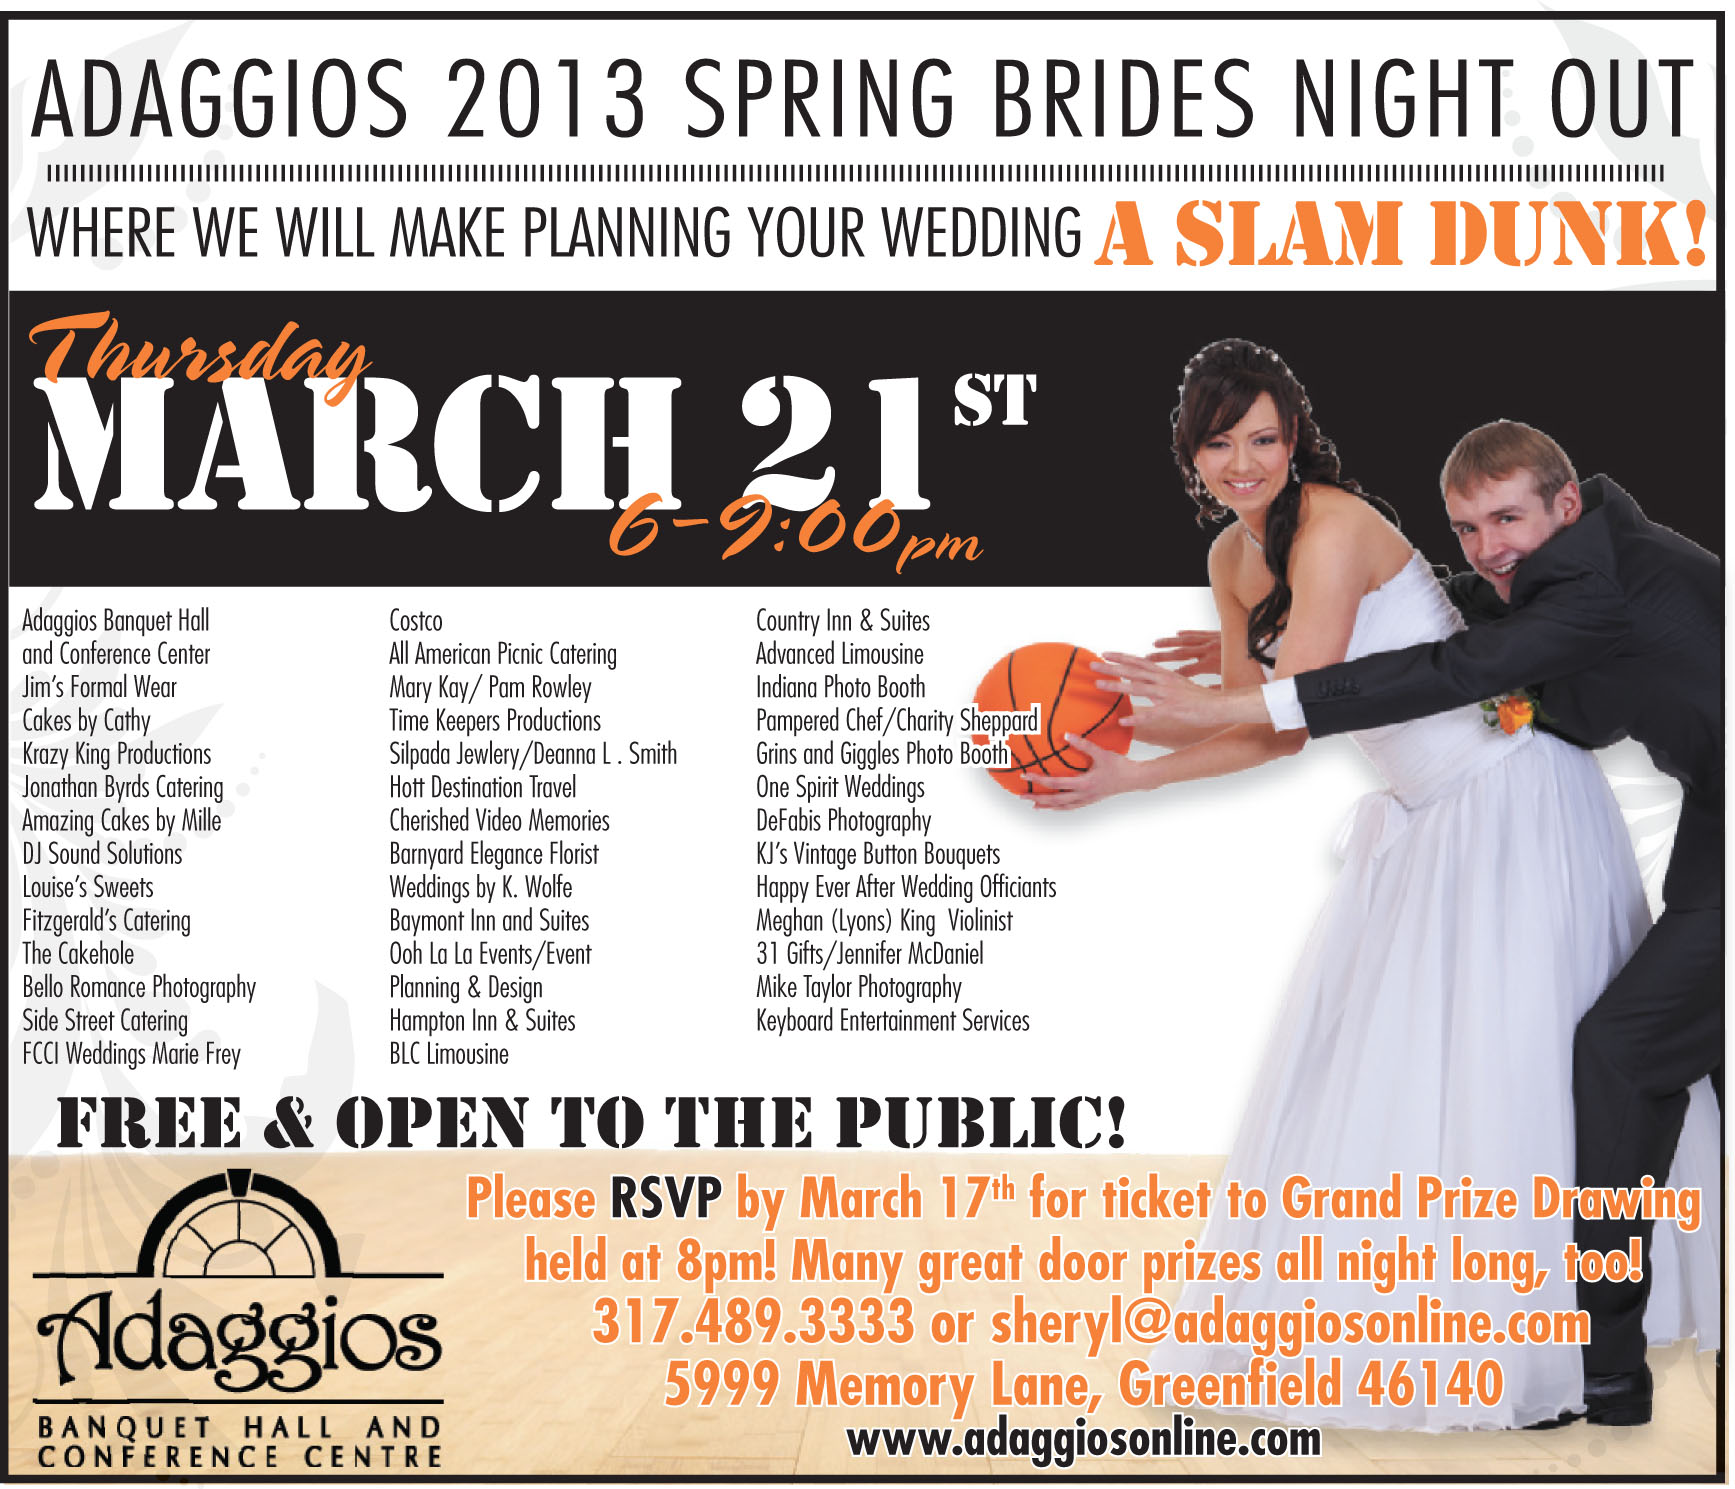 Adaggios Spring Bridal Show 3x5 Vendor List.indd